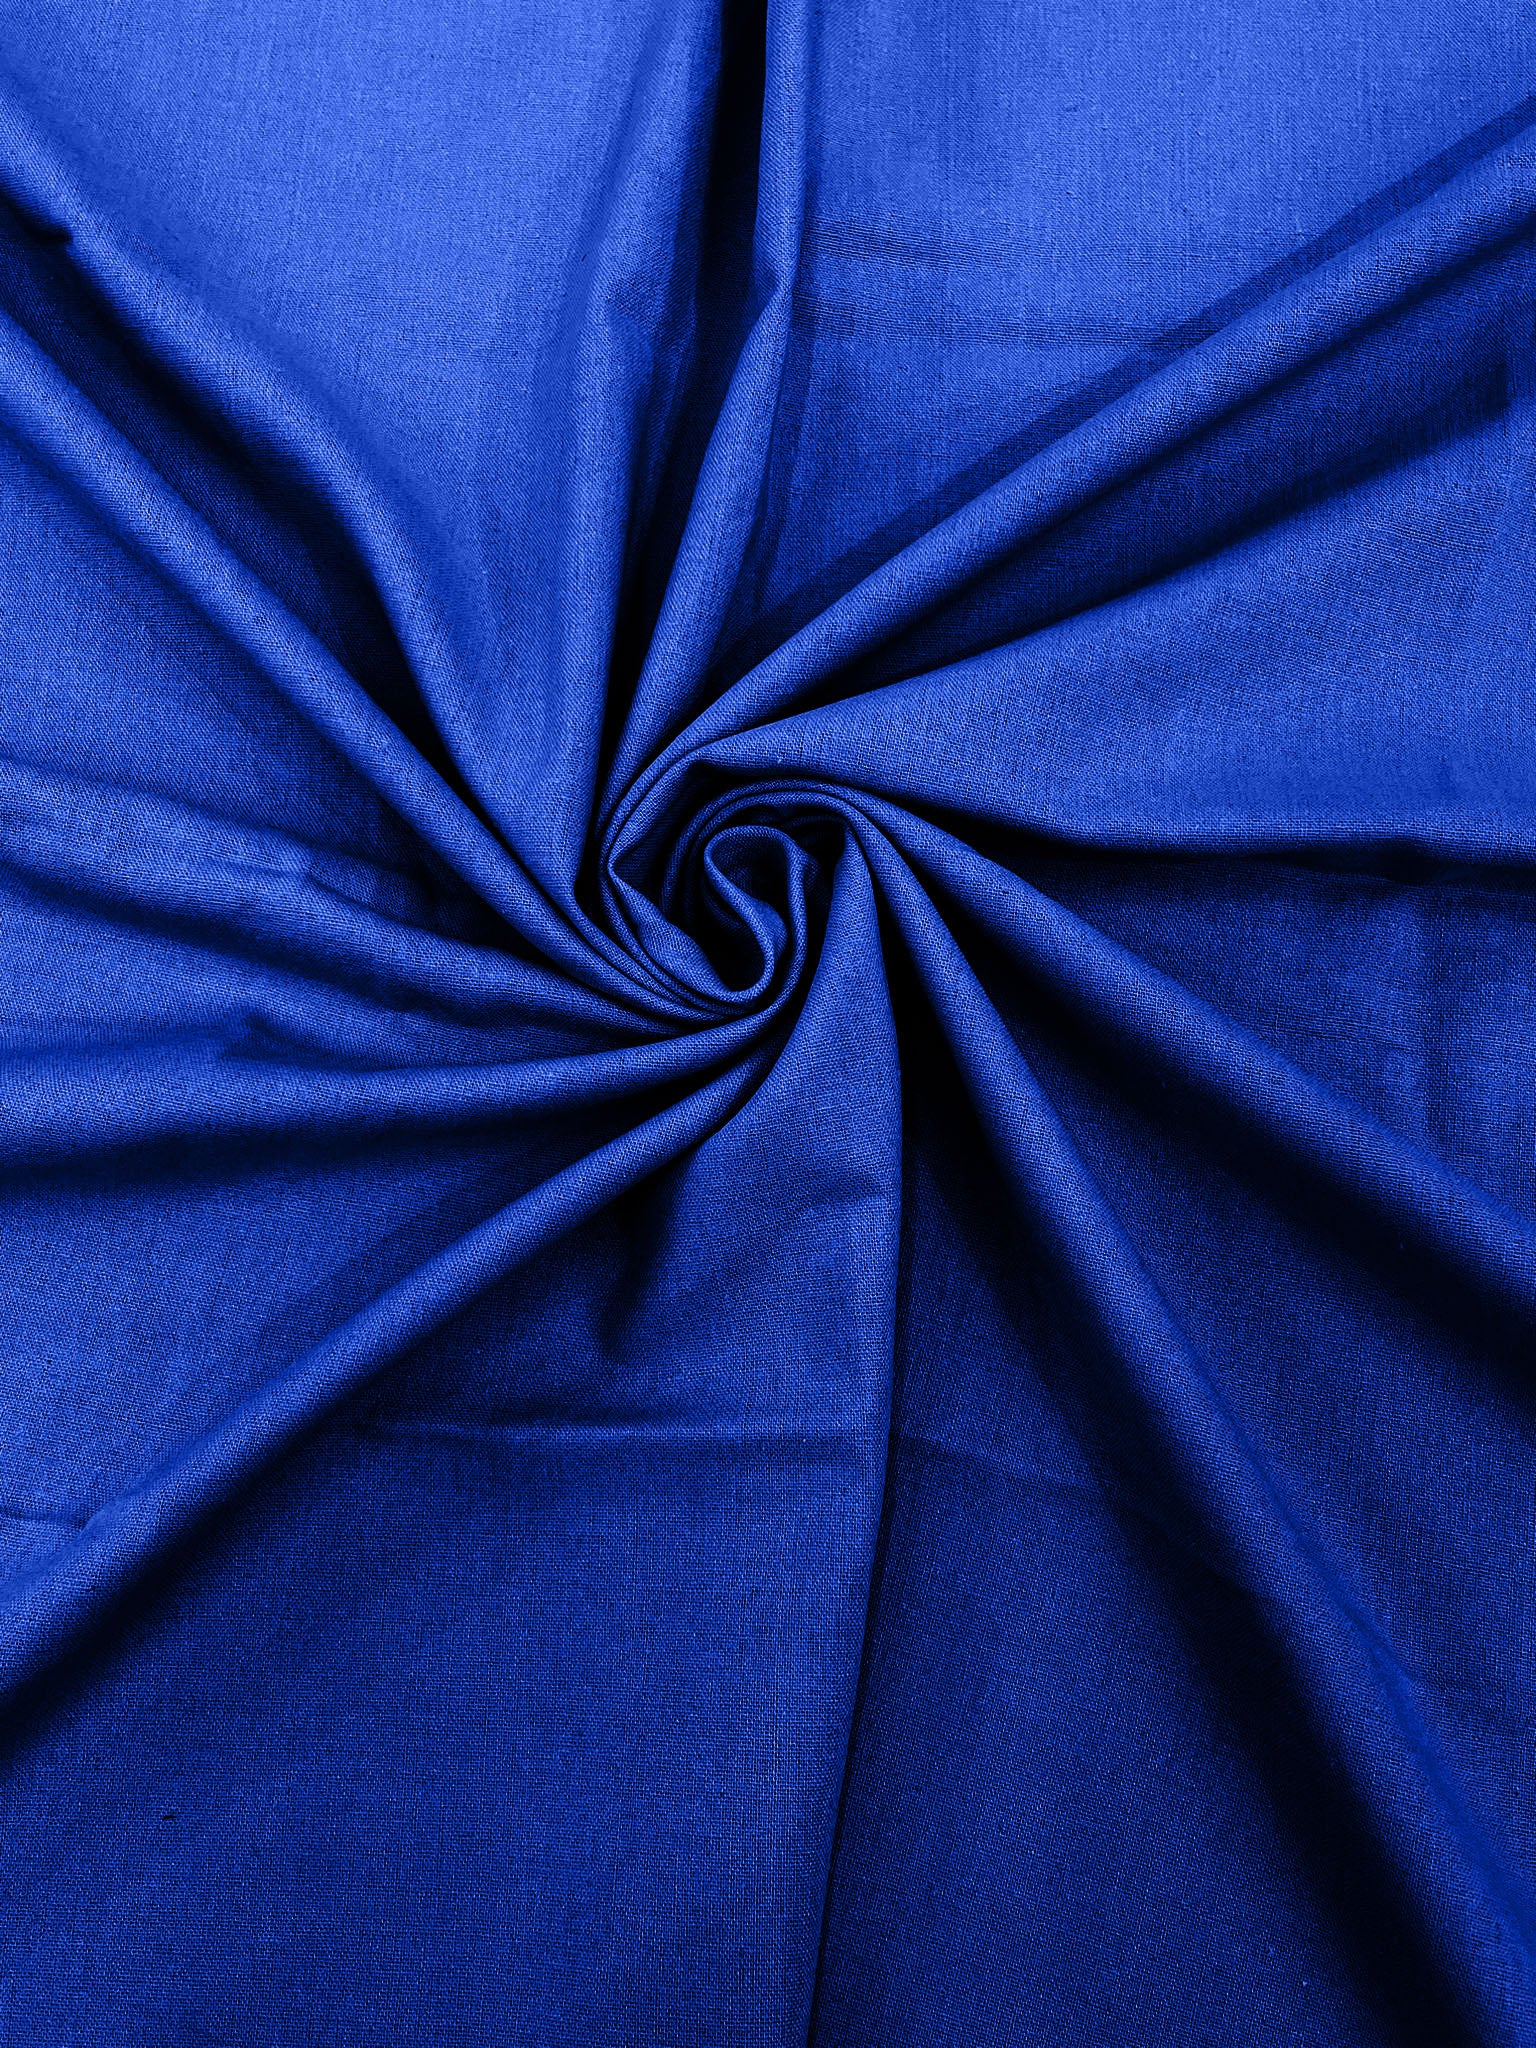 Light Royal Blue Medium Weight Natural Linen Fabric/50 " Wide/Clothing